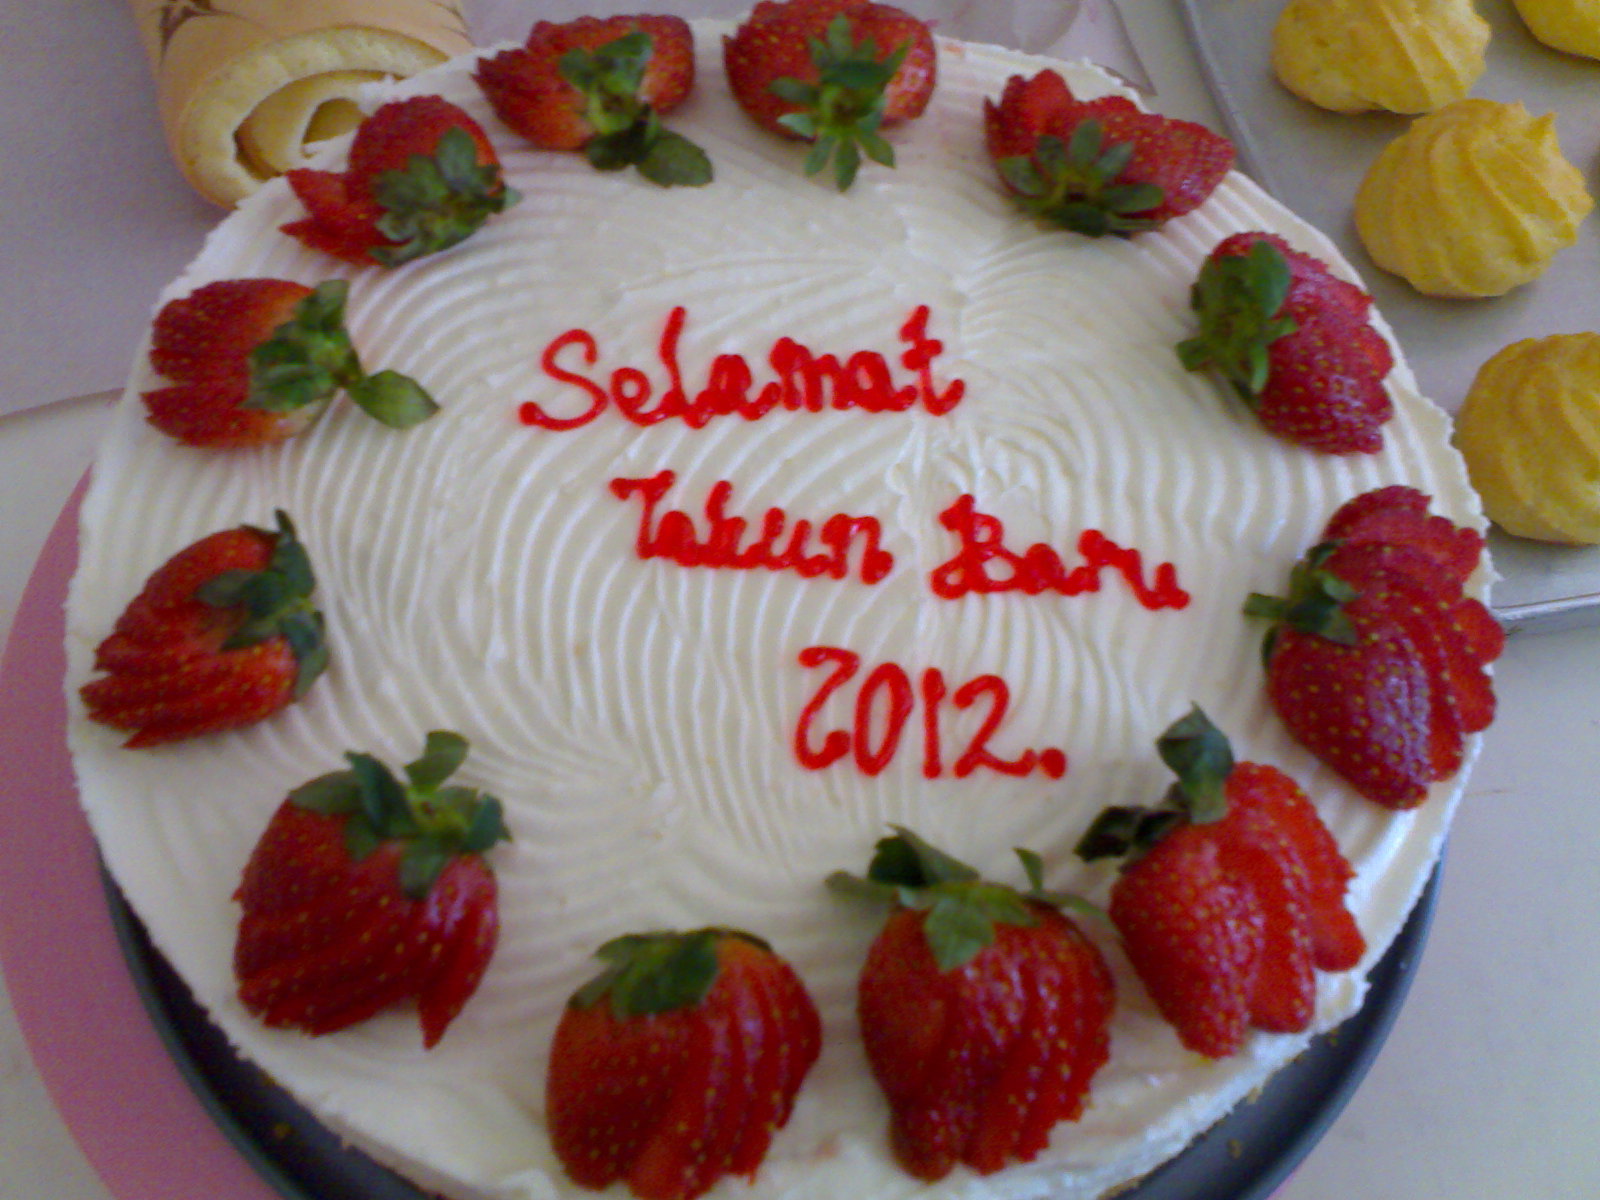 CherishLoveTogether: Kelas Kek di Fatihah Cake House